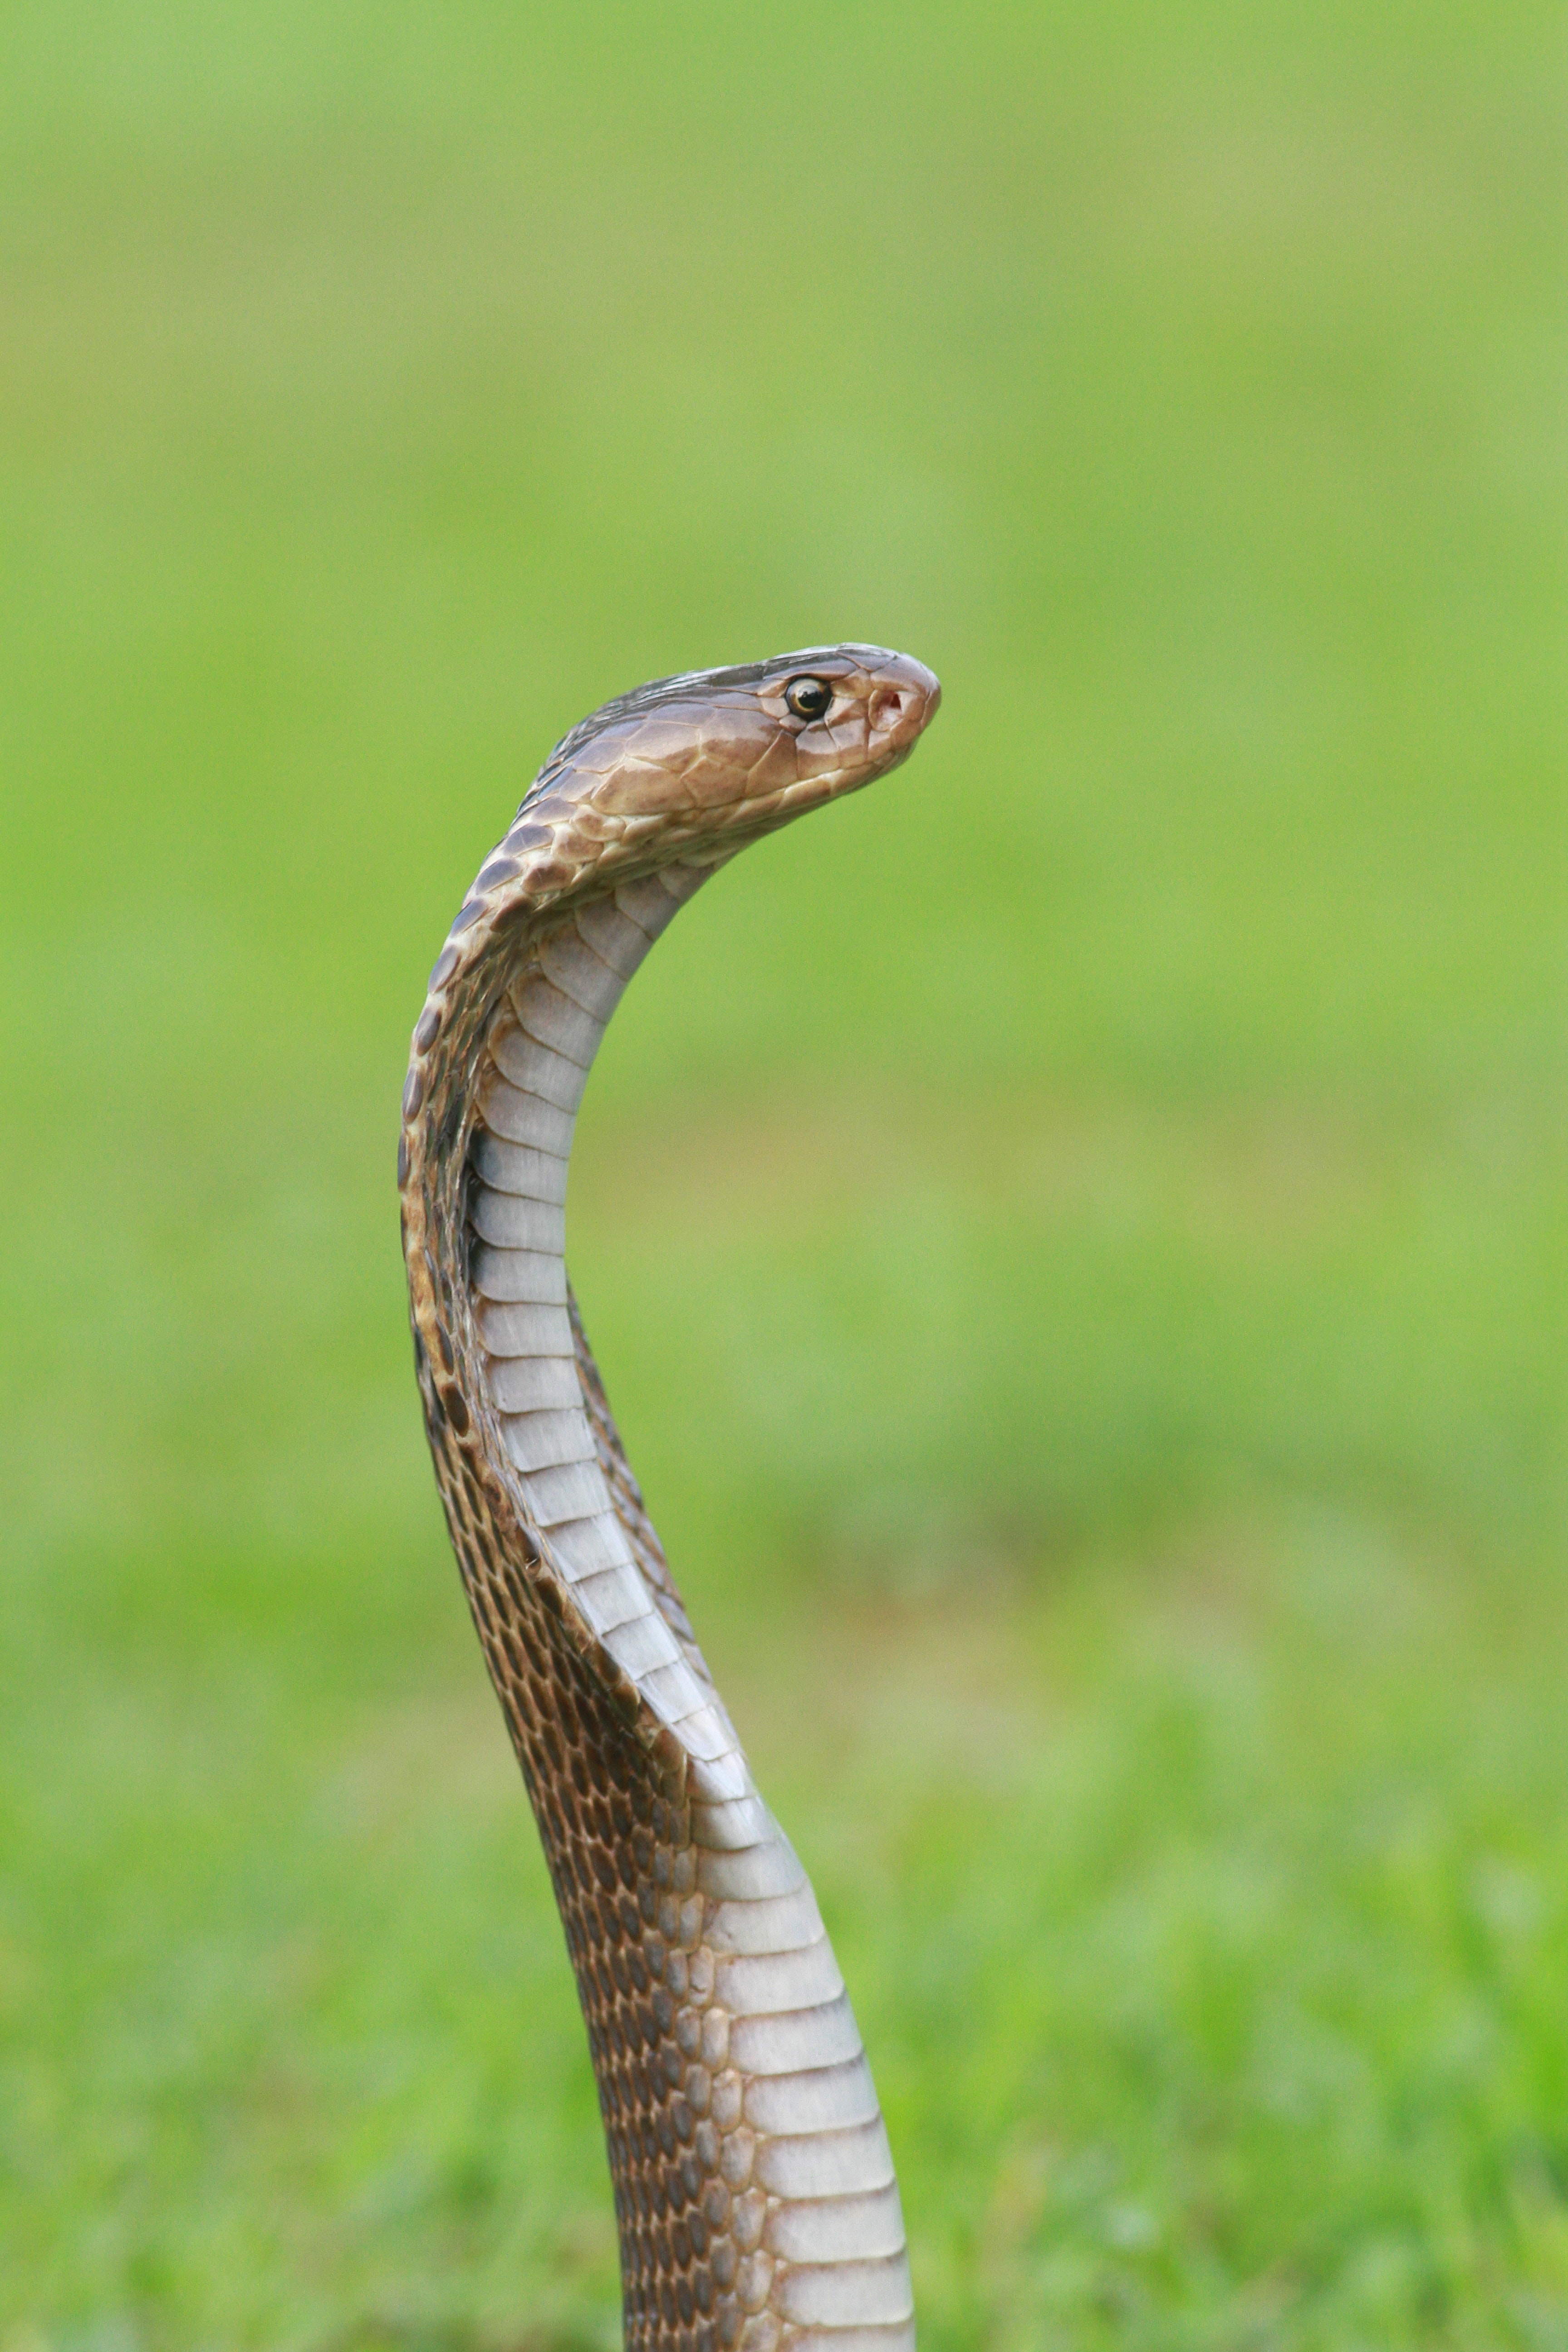 Snake Photos - Snake Image Download , HD Wallpaper & Backgrounds